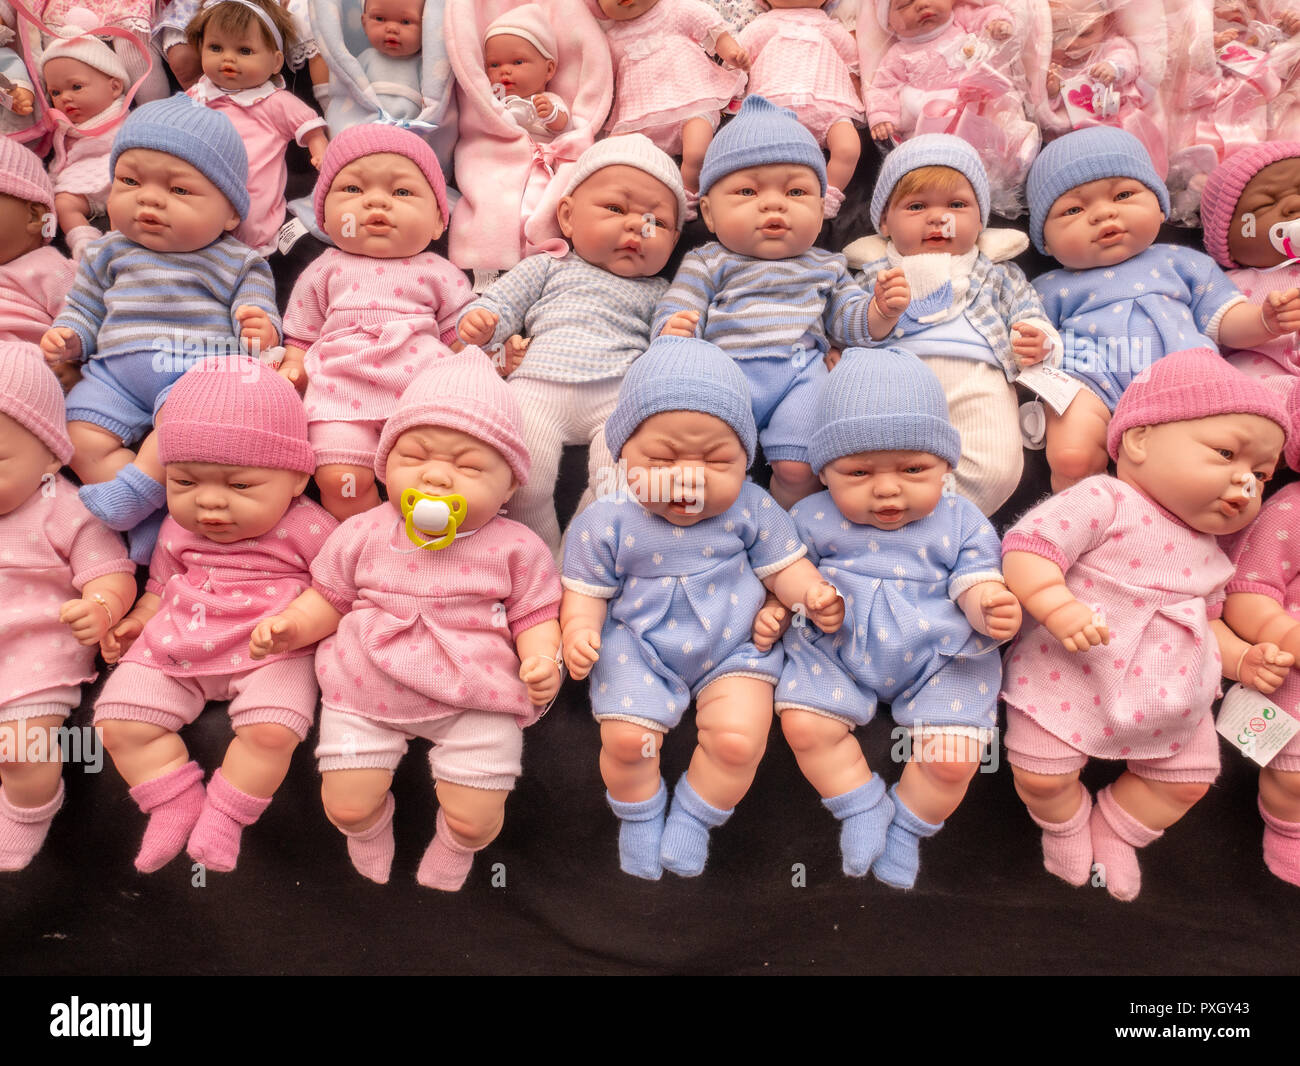 Baby dolls on market stall Stock Photo